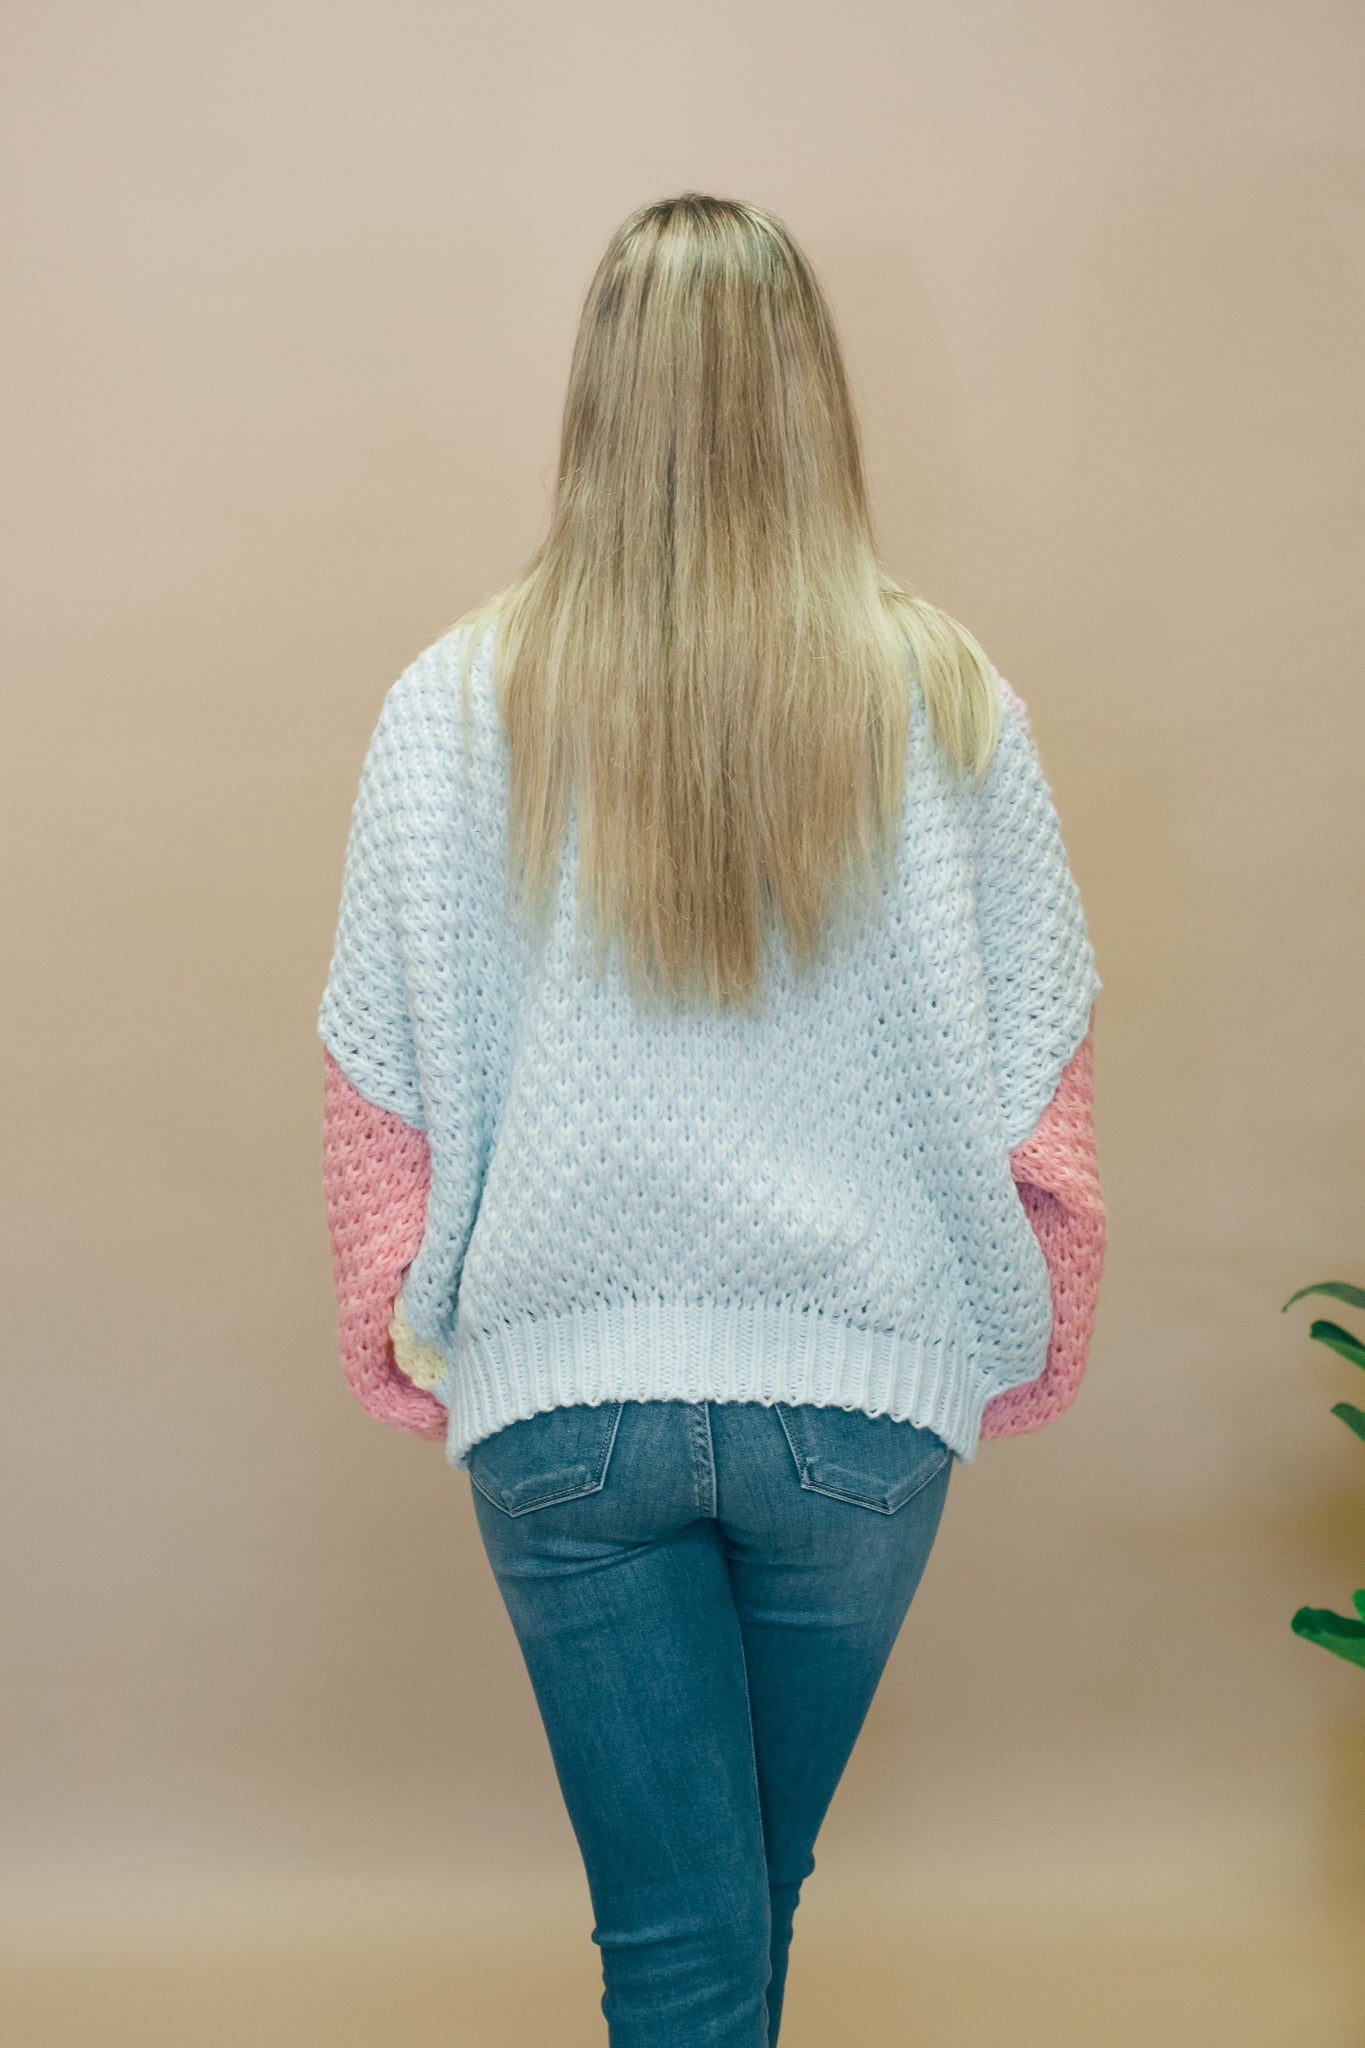 Lavendar & Yellow Colorblock Sweater